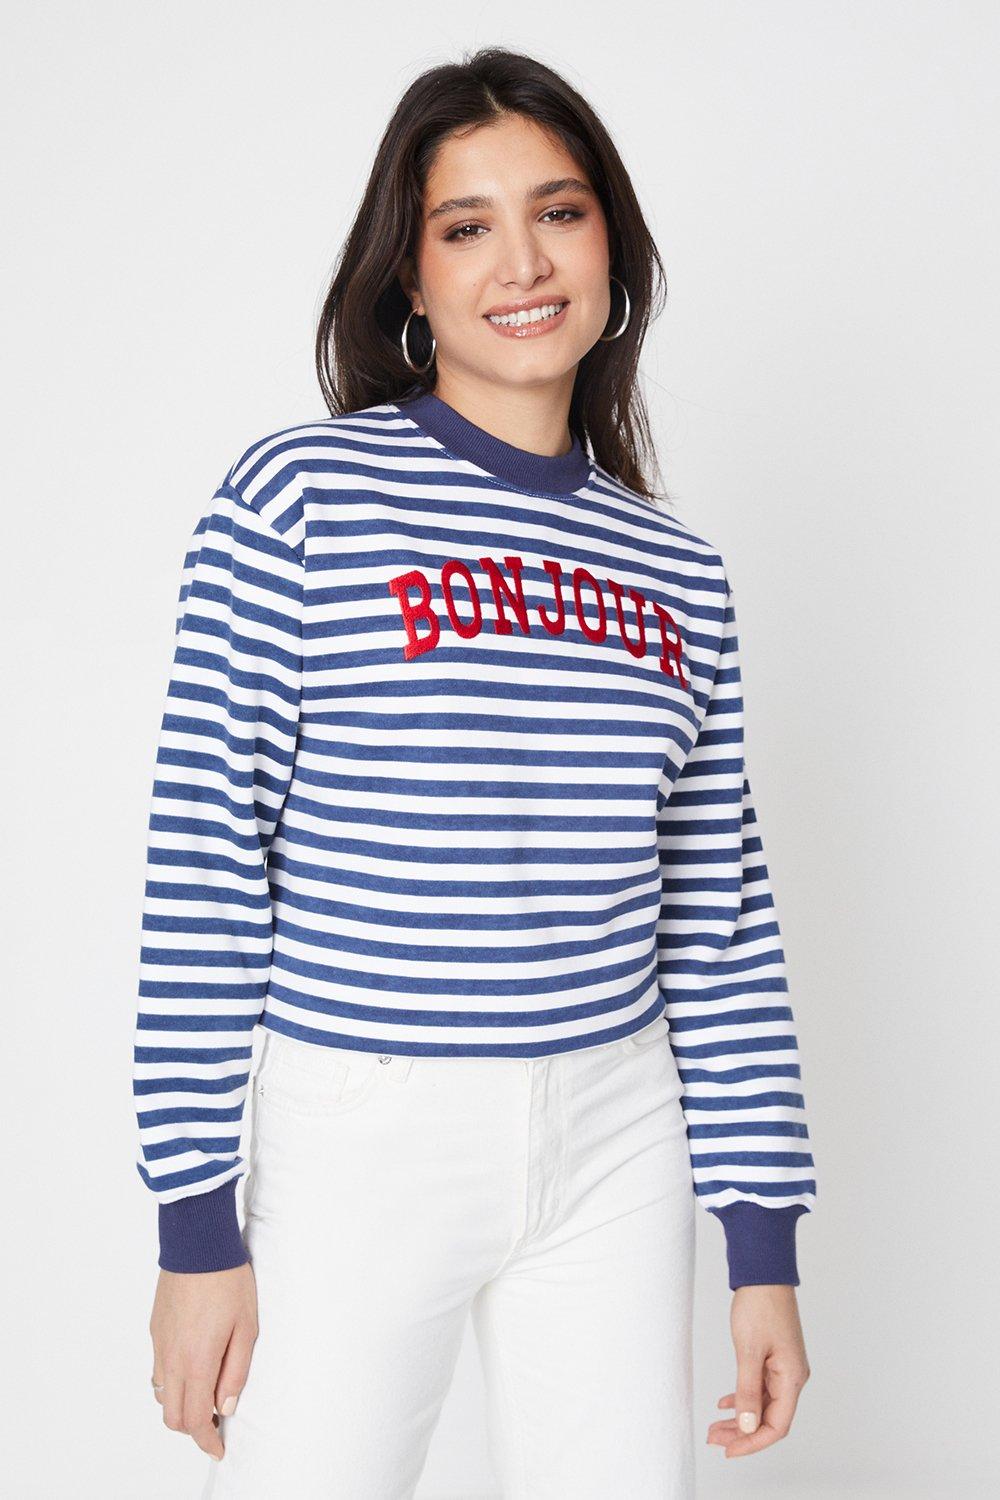 Women’s Stripe Slogan Sweatshirt - XL